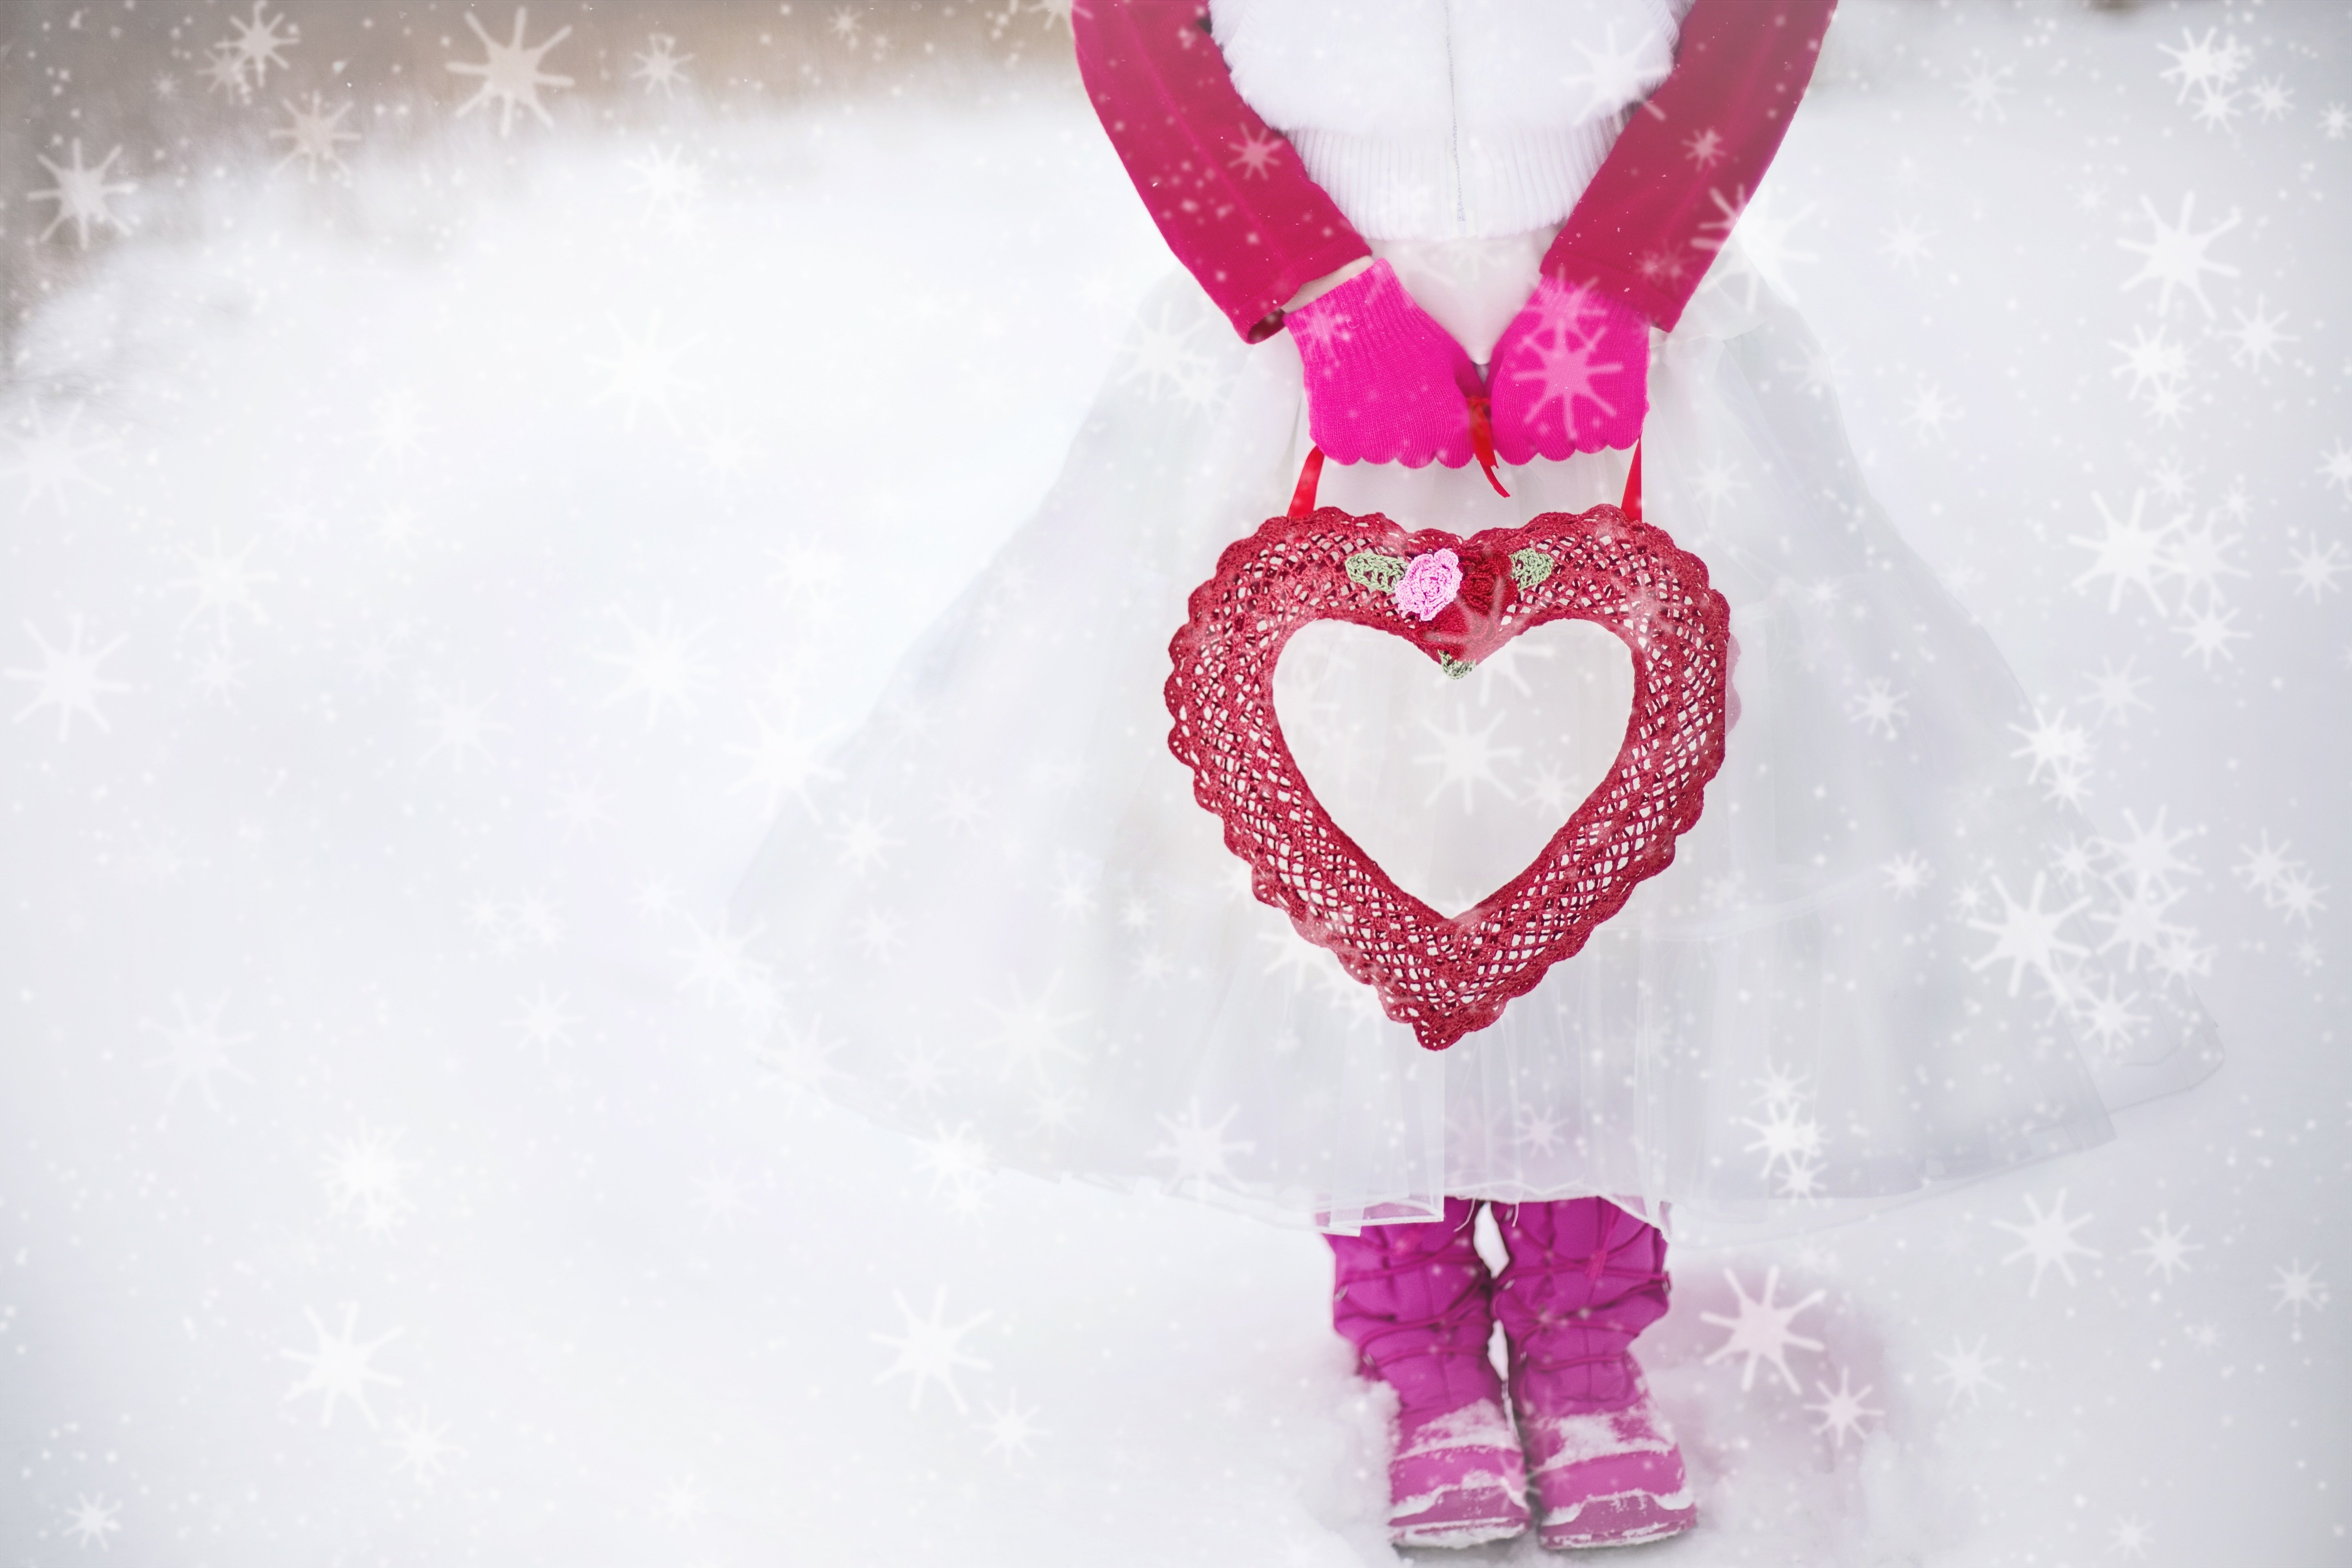 HD wallpaper, Romantic, Girly, Love Heart, Girl, Snow, Red Heart, 5K, Valentine, February, Winter